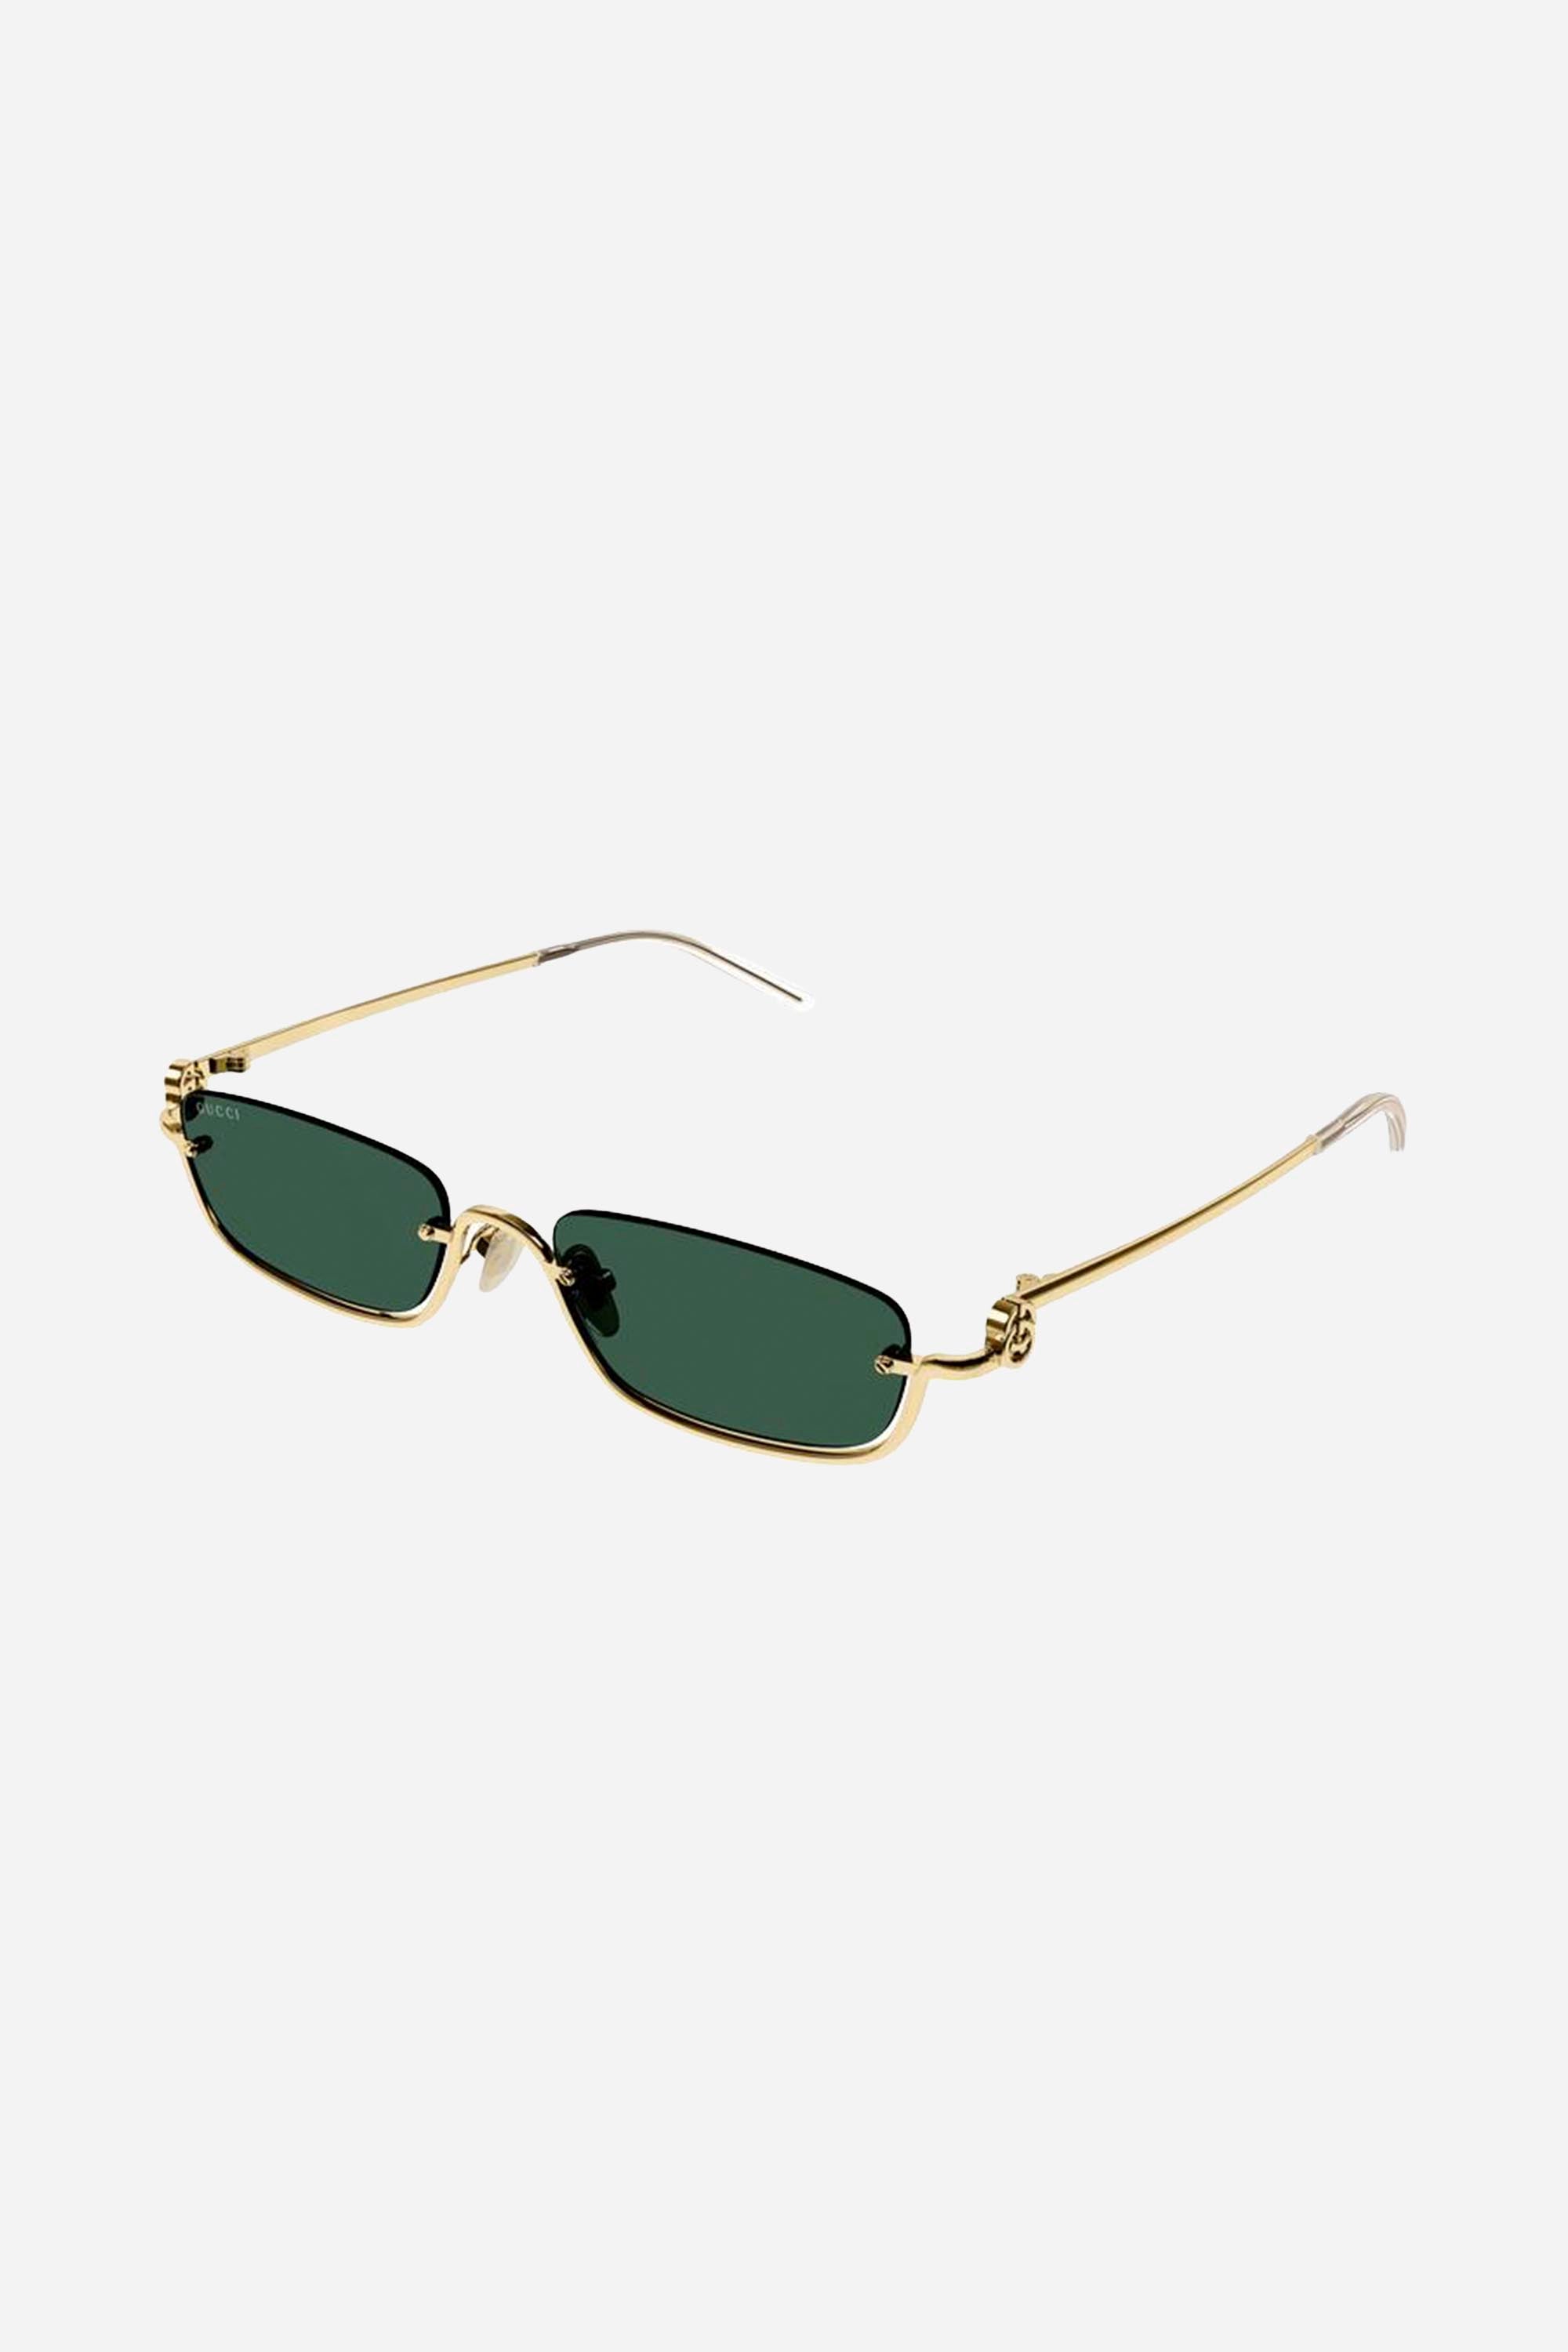 Gucci micro metal sunglasses featuring green lenses - Eyewear Club